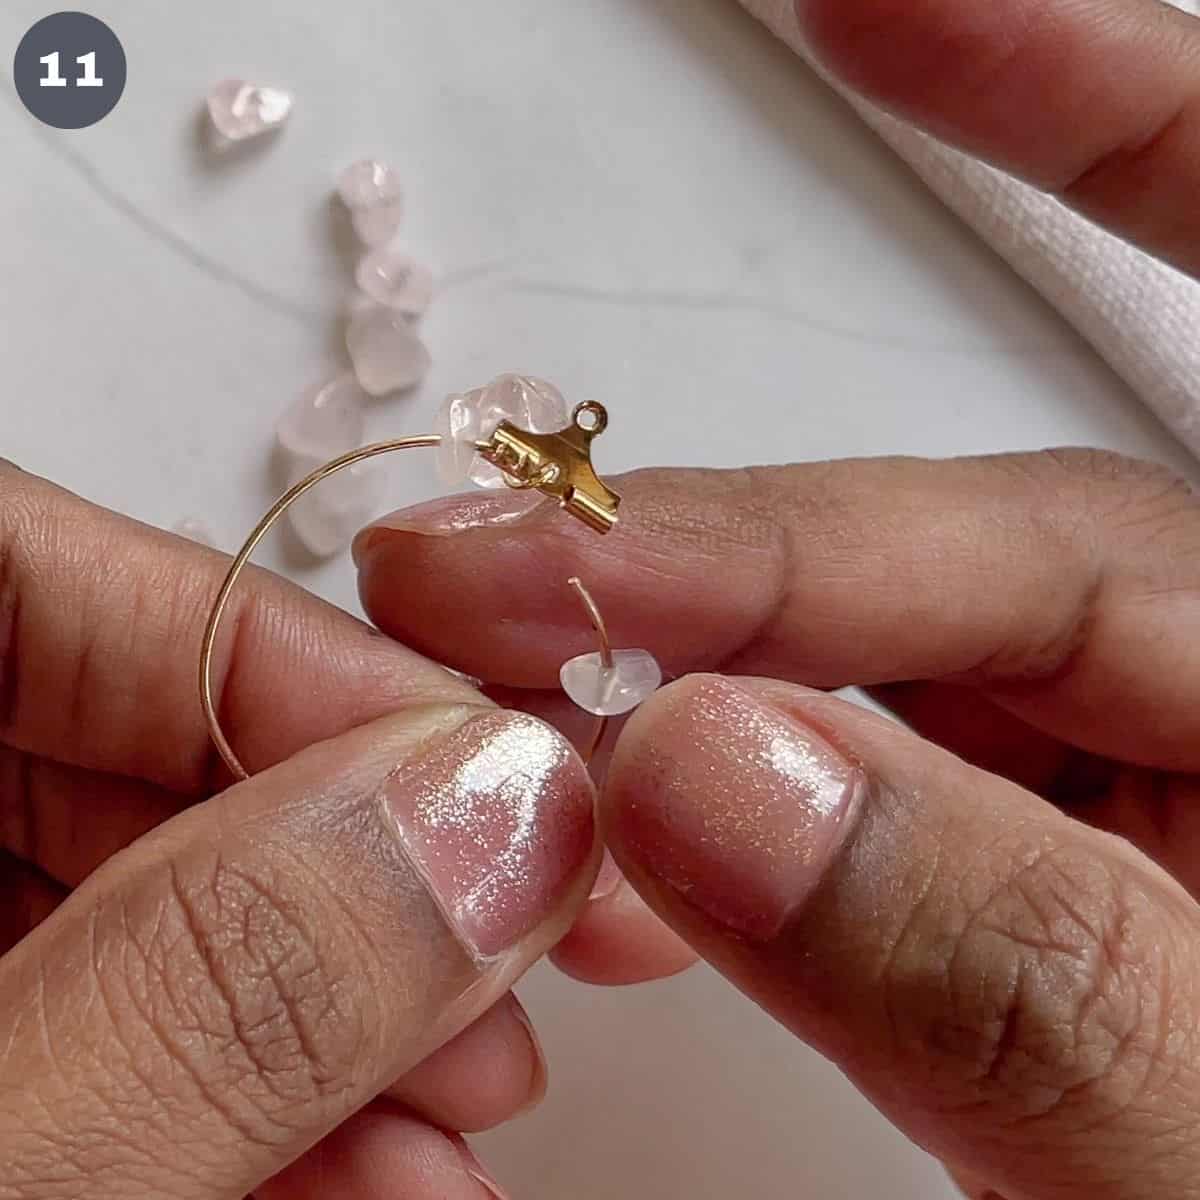 Inserting a rose quartz bead into a hoop.